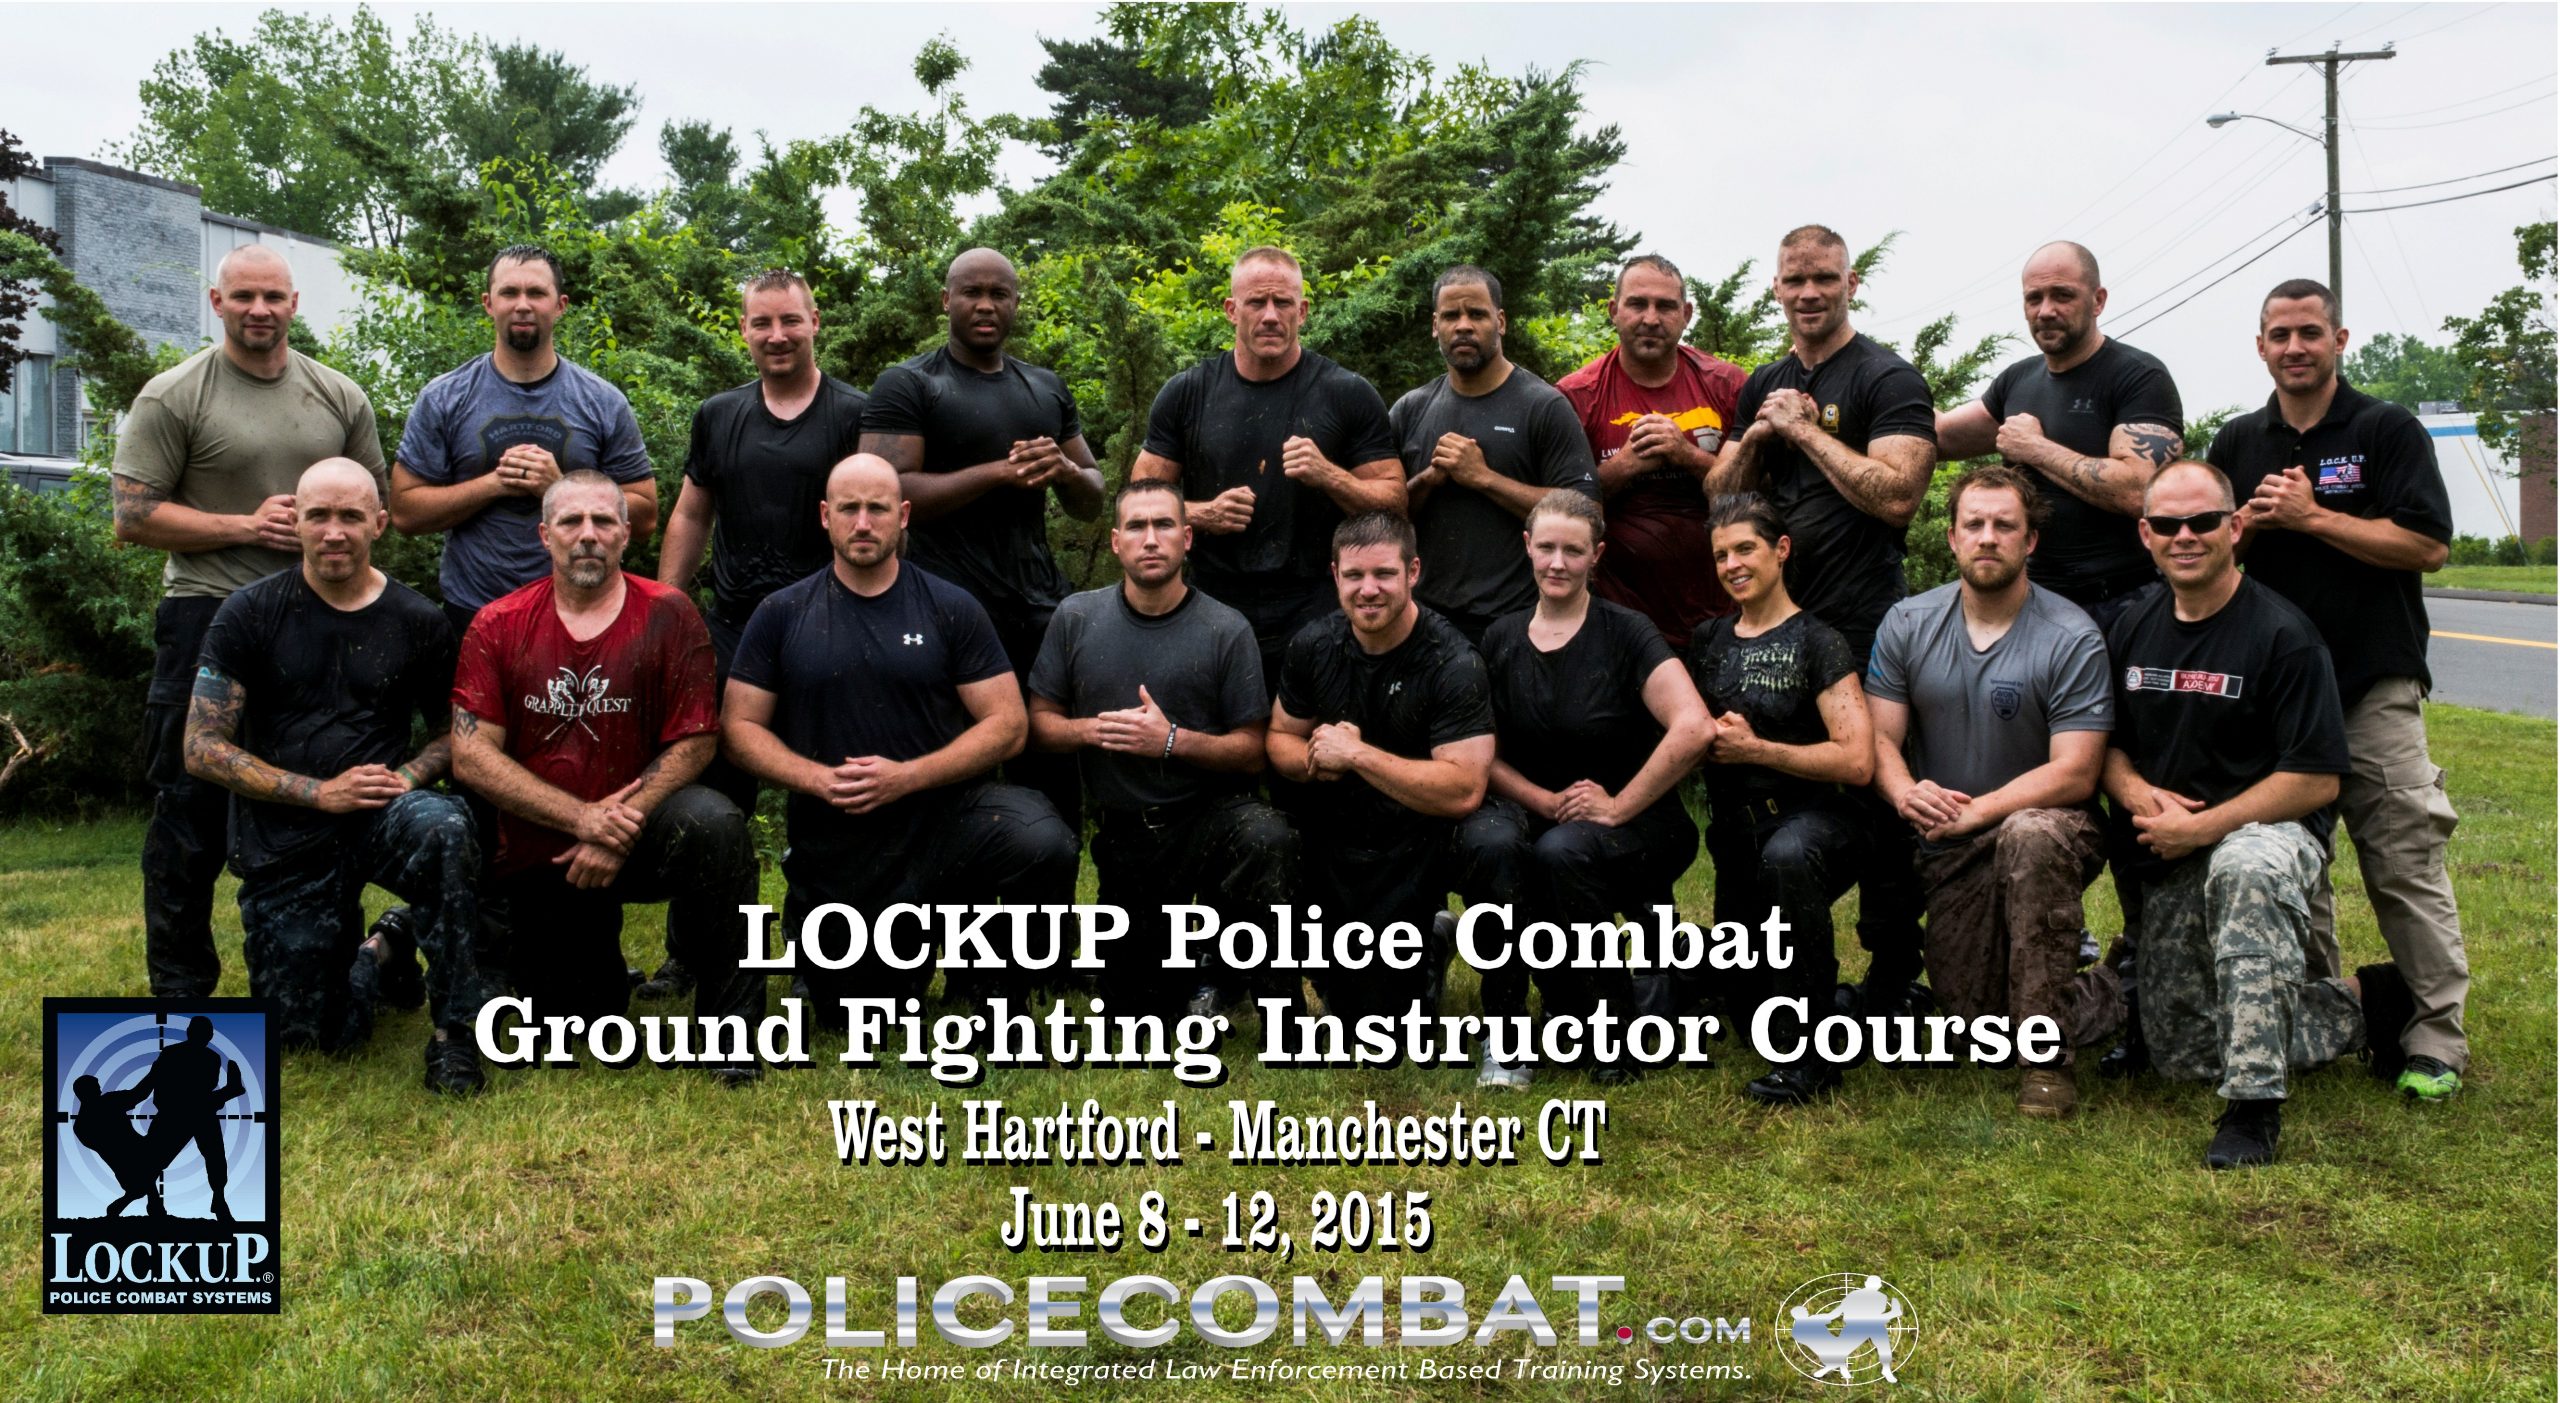 L.O.C.K.U.P. ® Police Ground Fighting Instructor Training